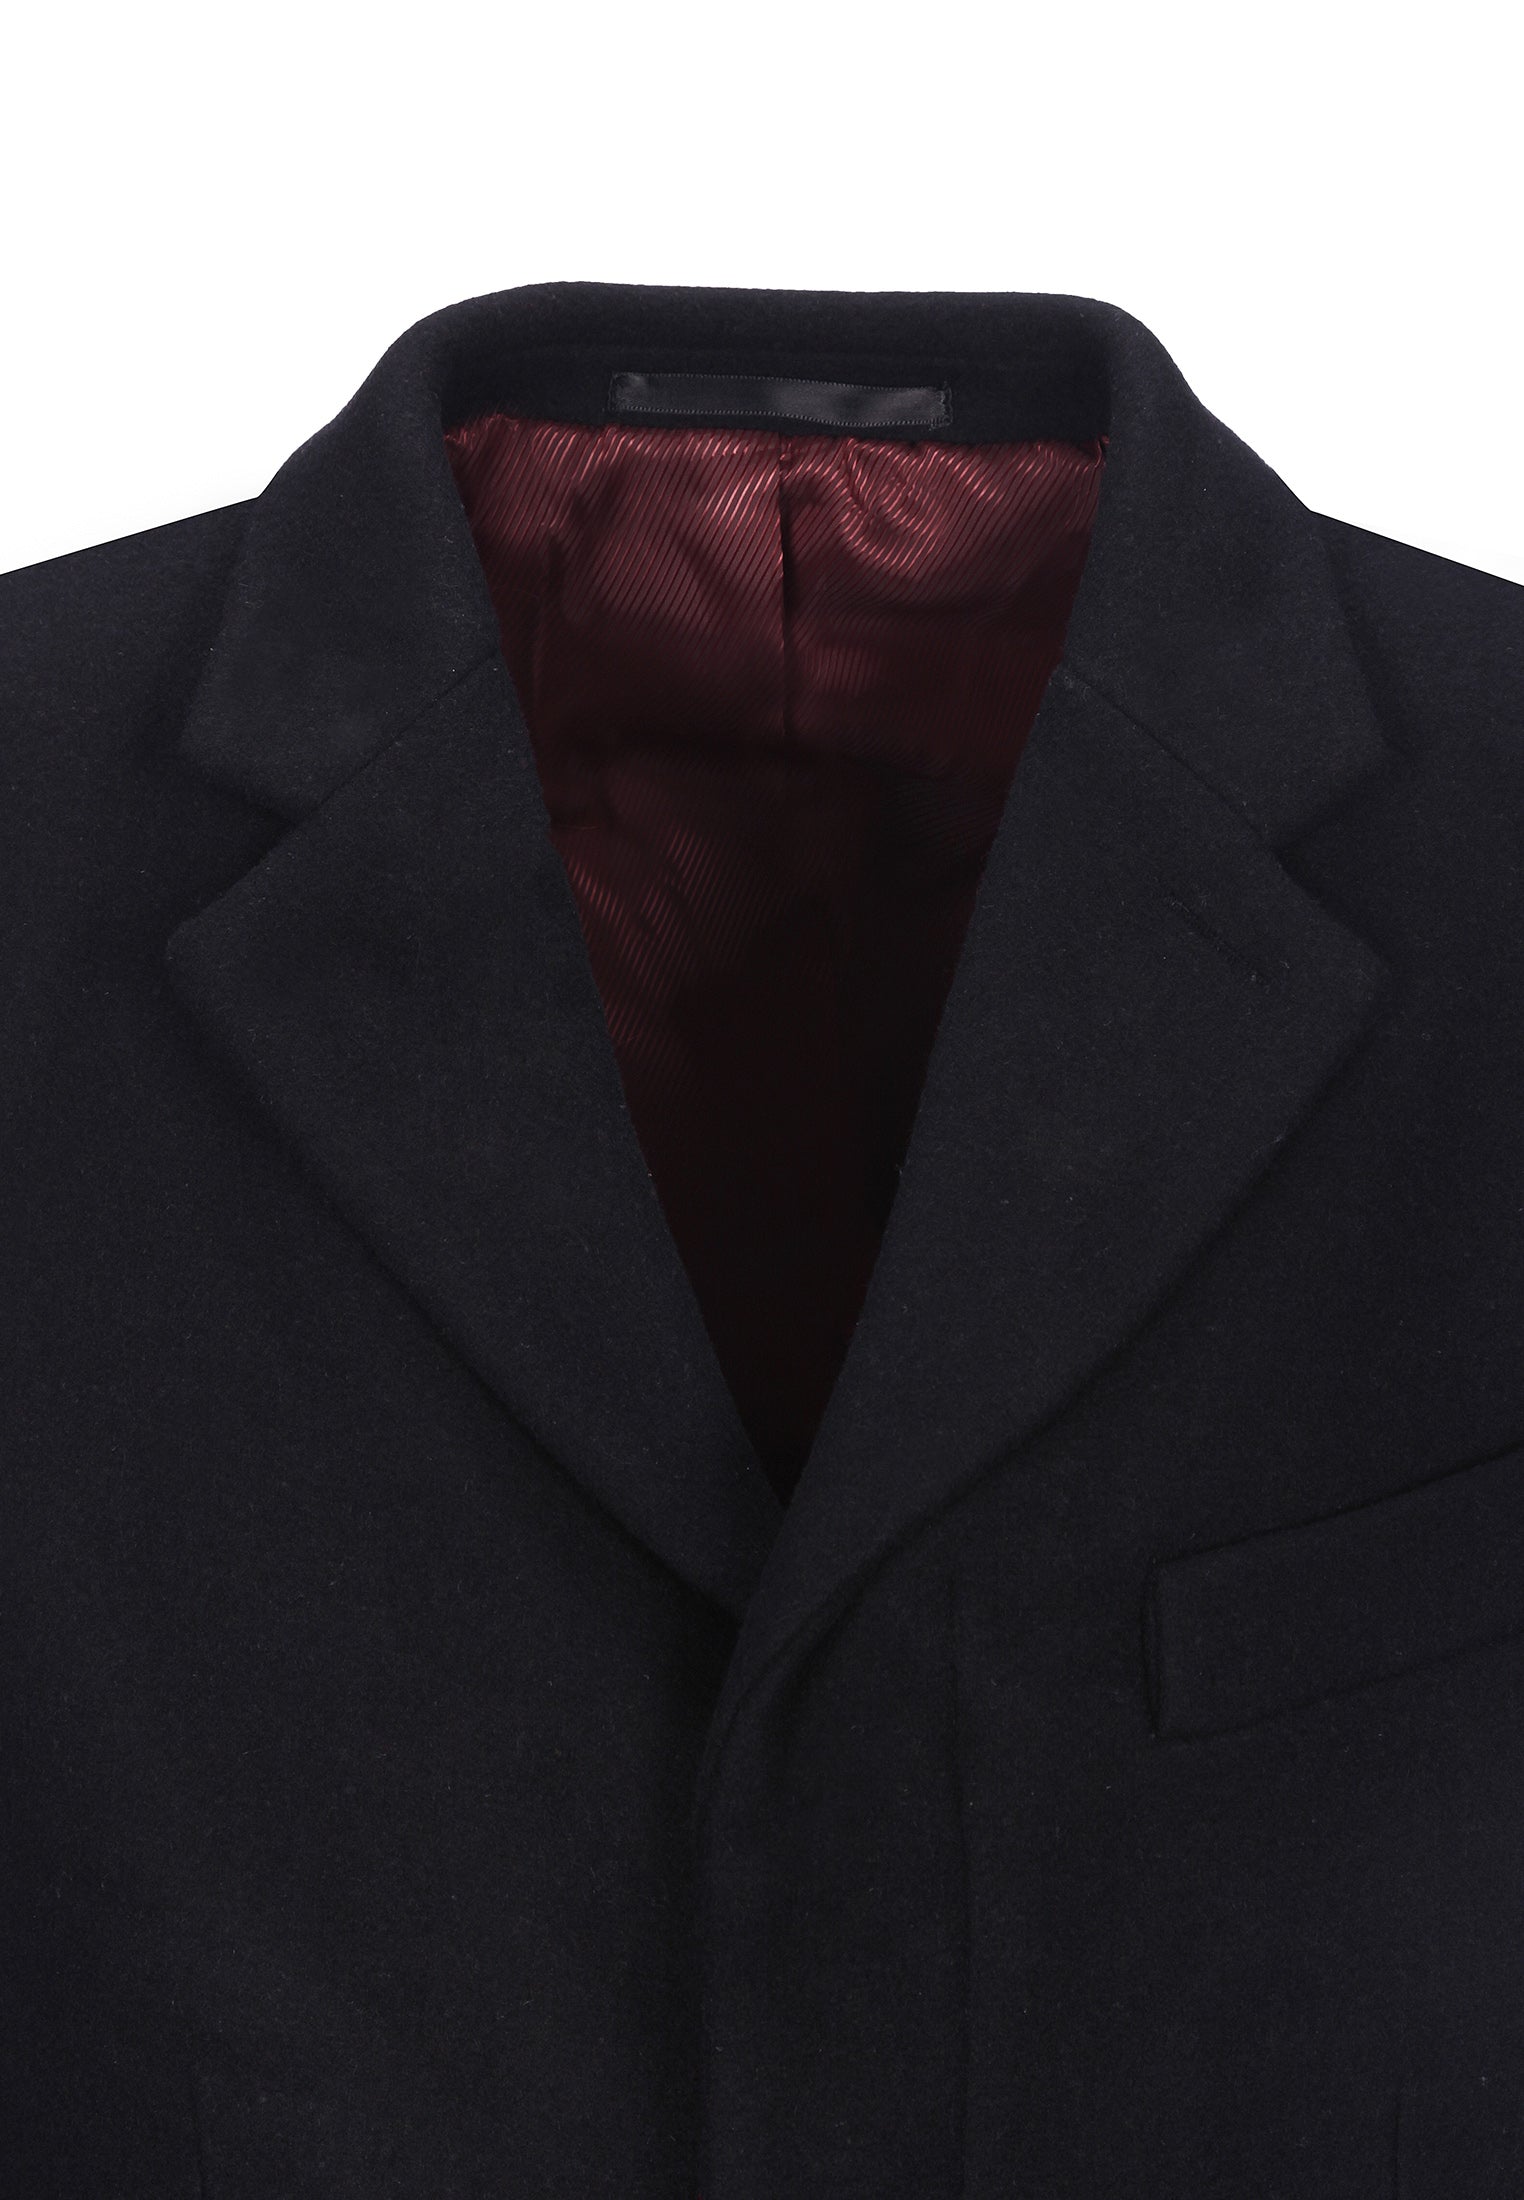 WALESBY Tailored wool overcoat - Merc London